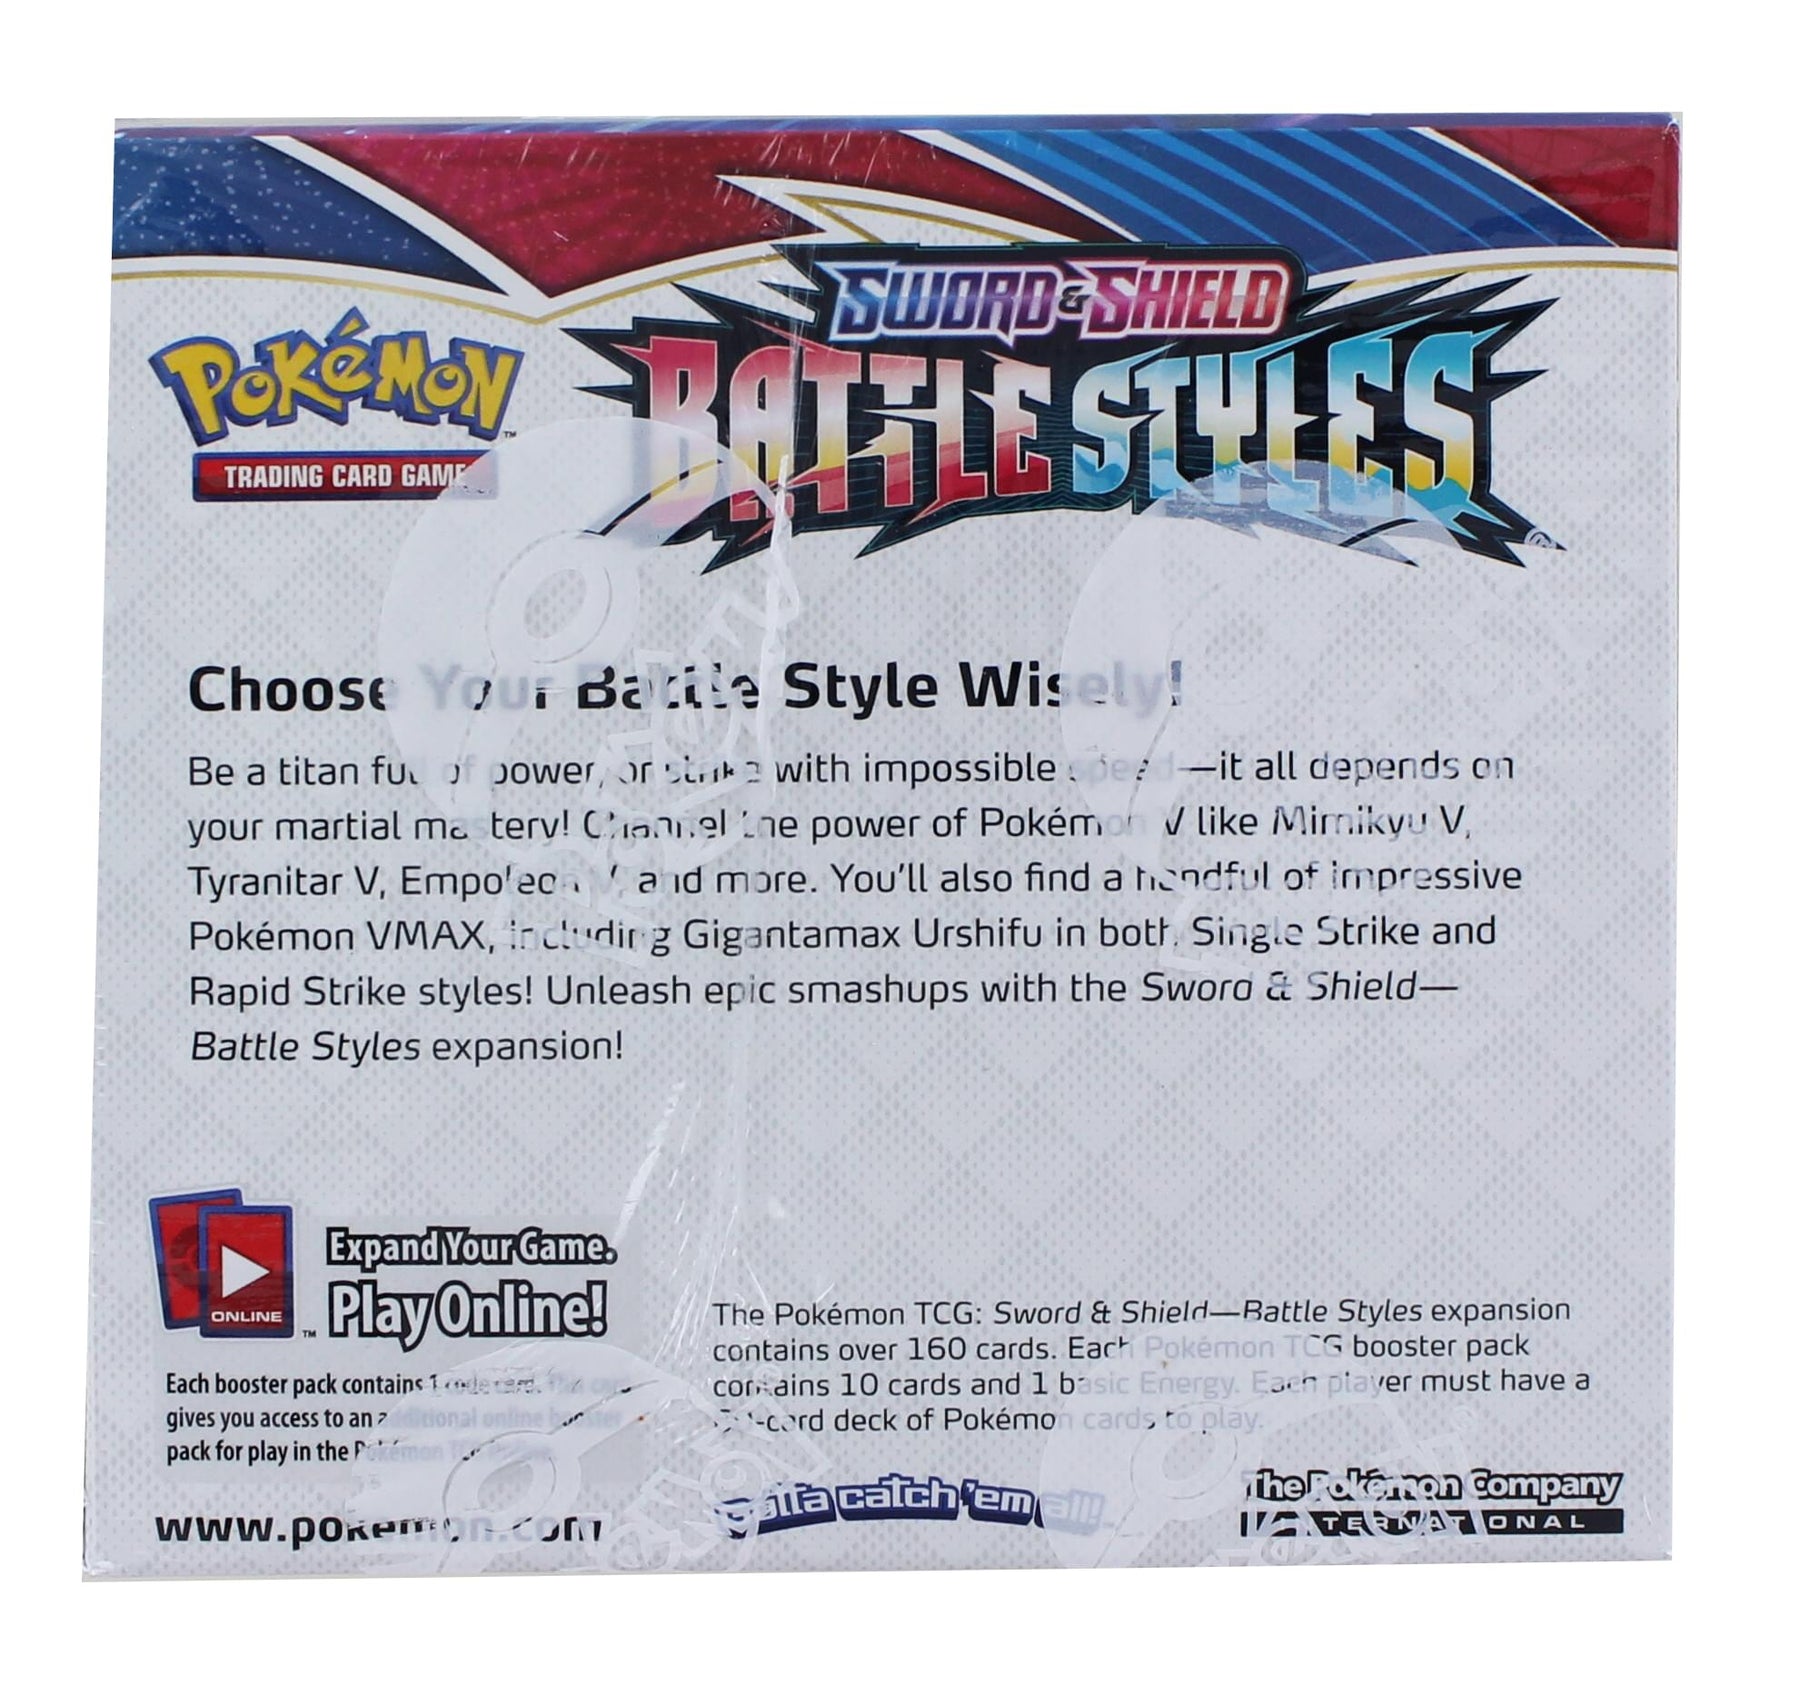 Pokémon Sword & Shield Battle Styles Booster Box